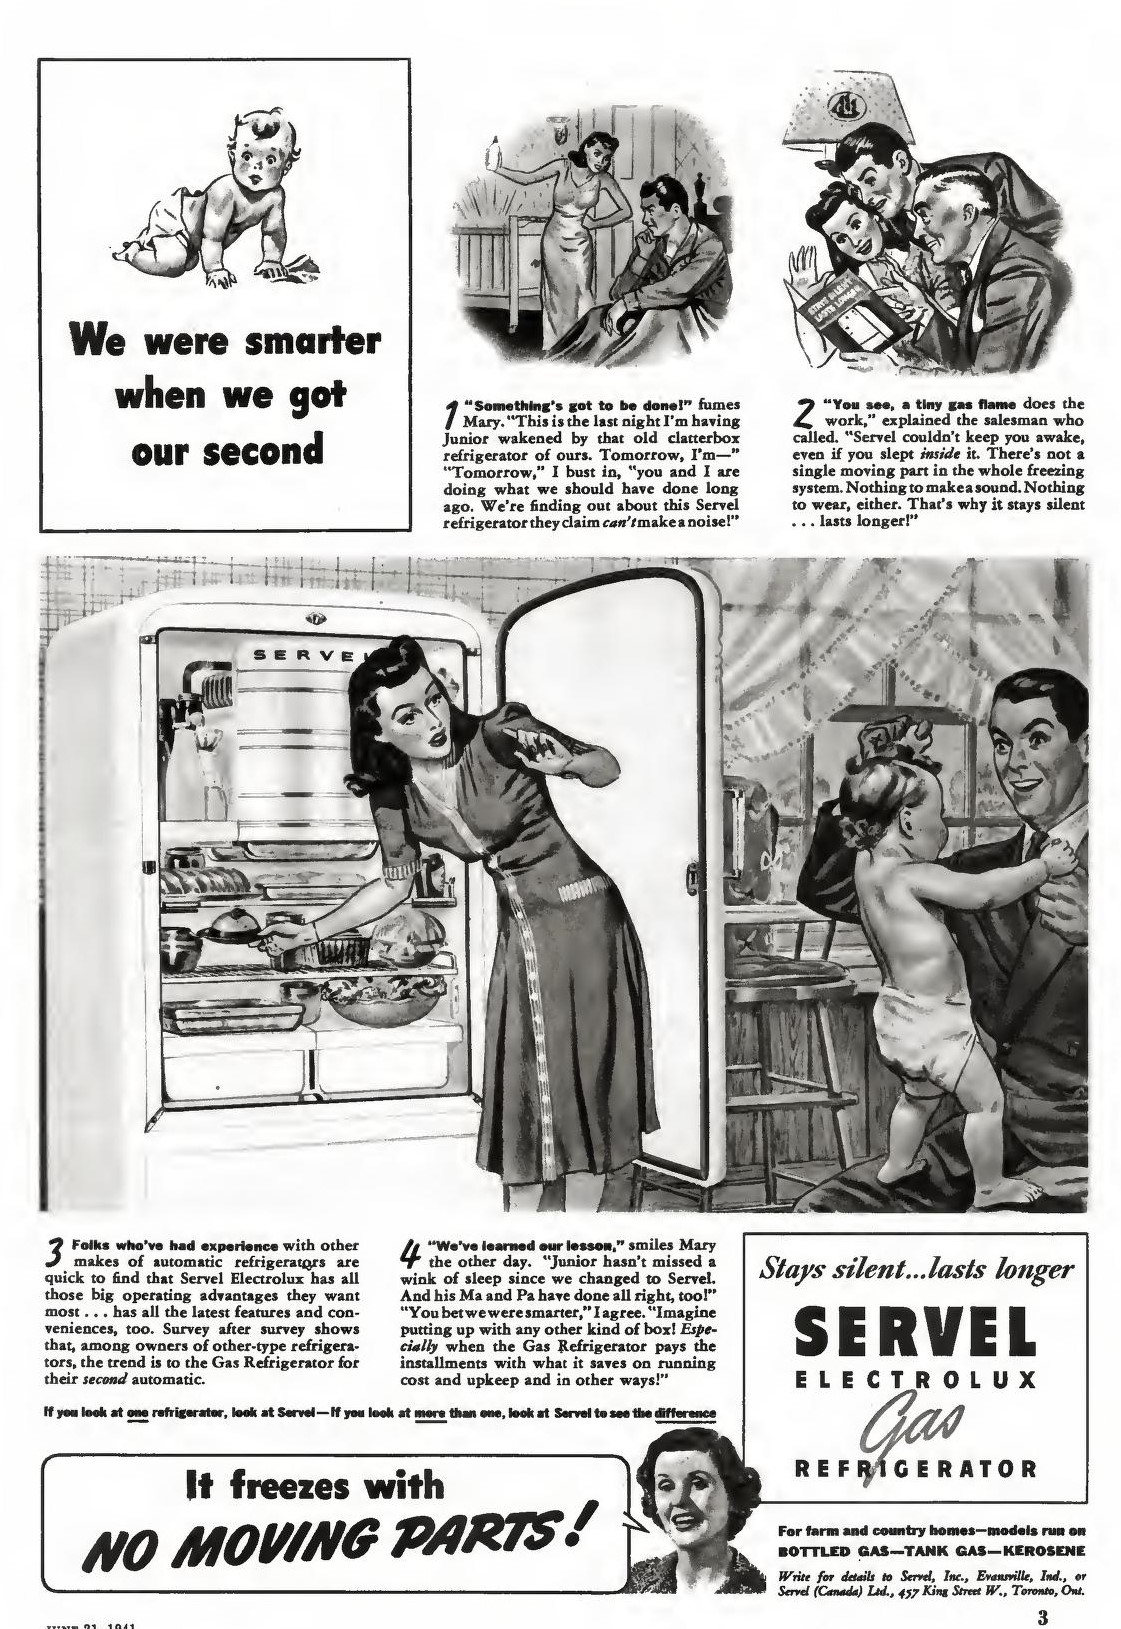 File Servel Electrolux Gas Refrigerator Ad 1941 Jpg Wikimedia Commons